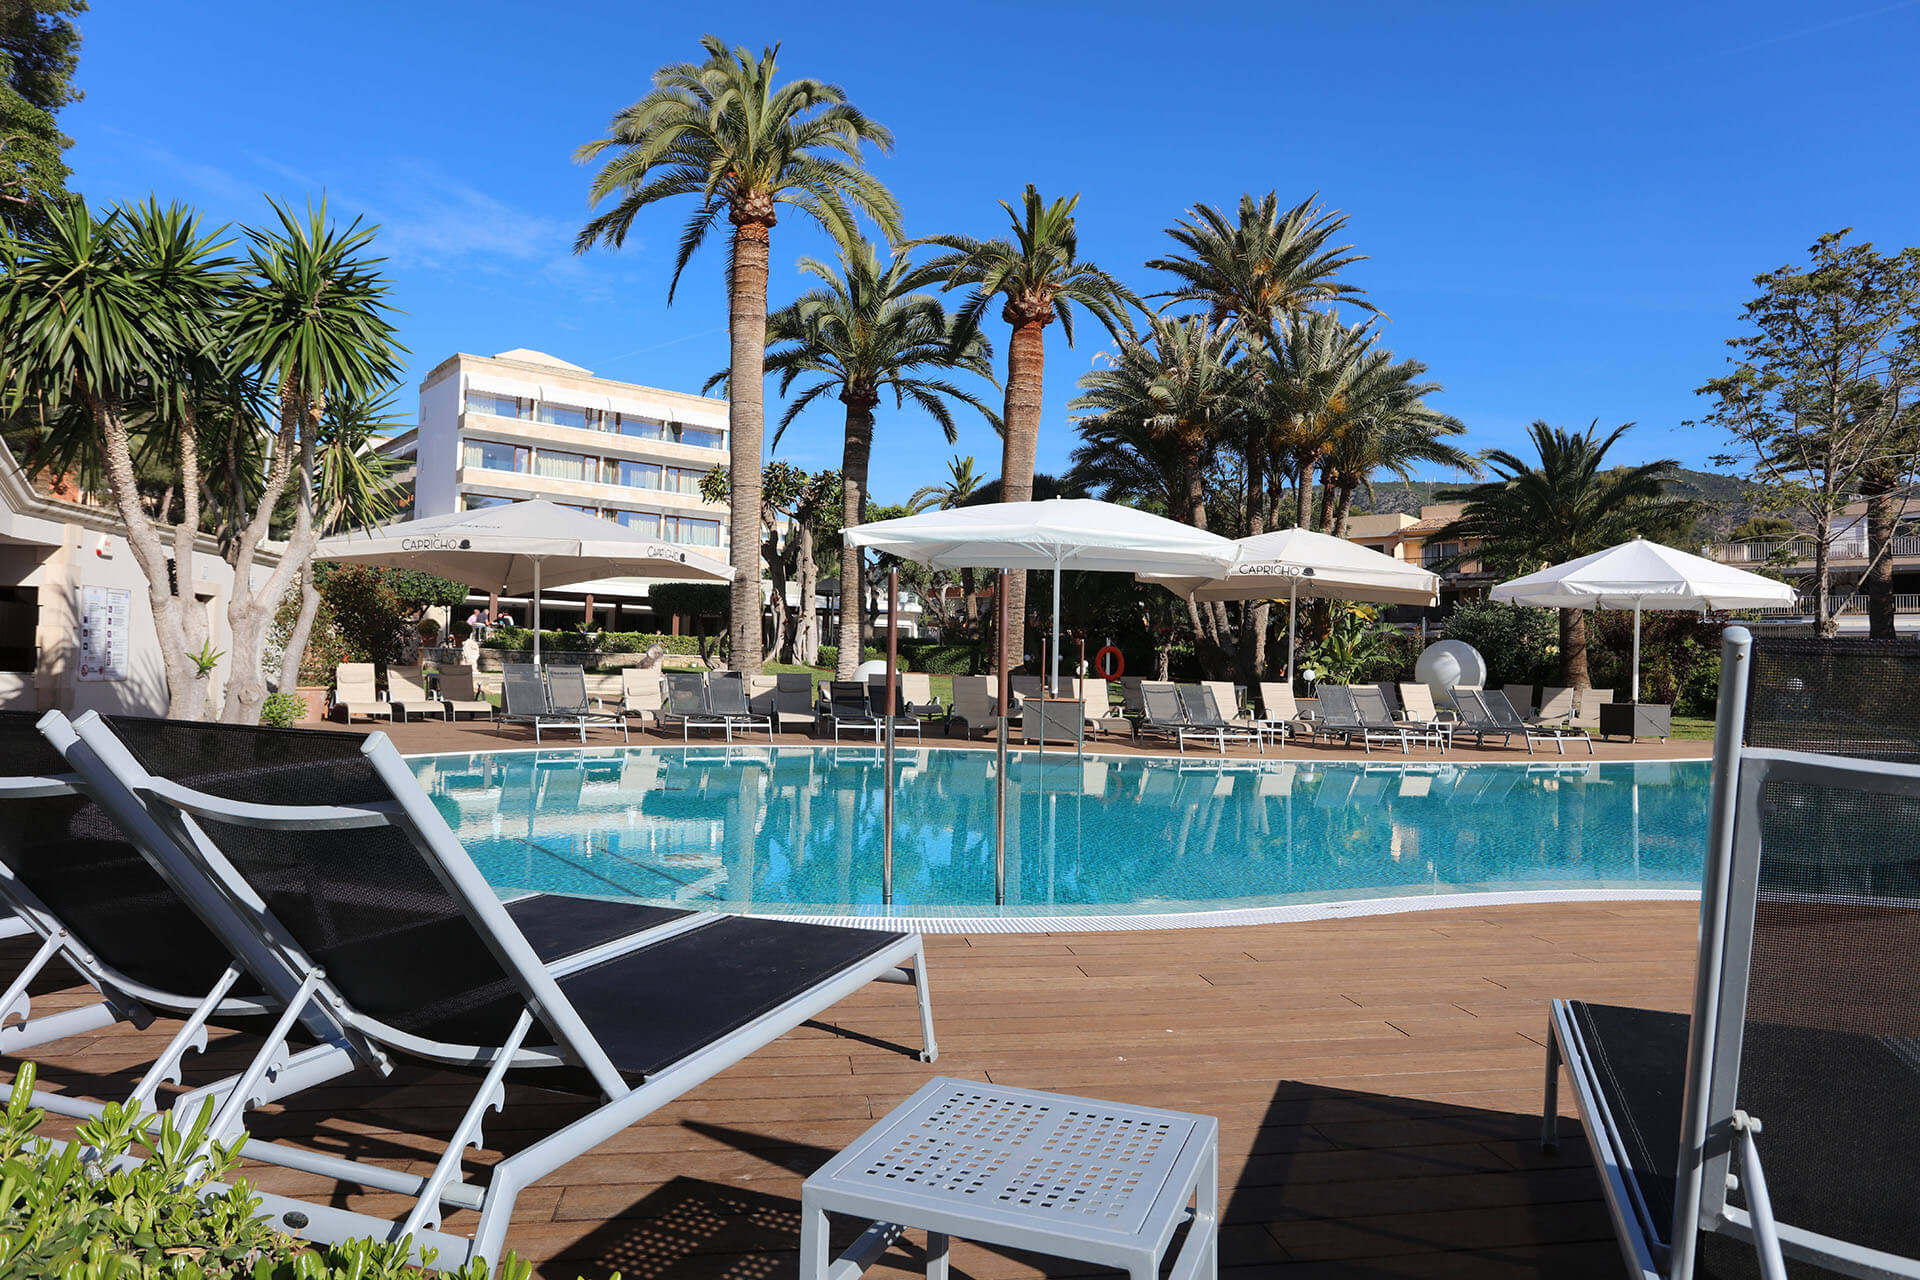 Outdoor pool and palm trees at Son Caliu Spa Oasis Hotel, Mallorca